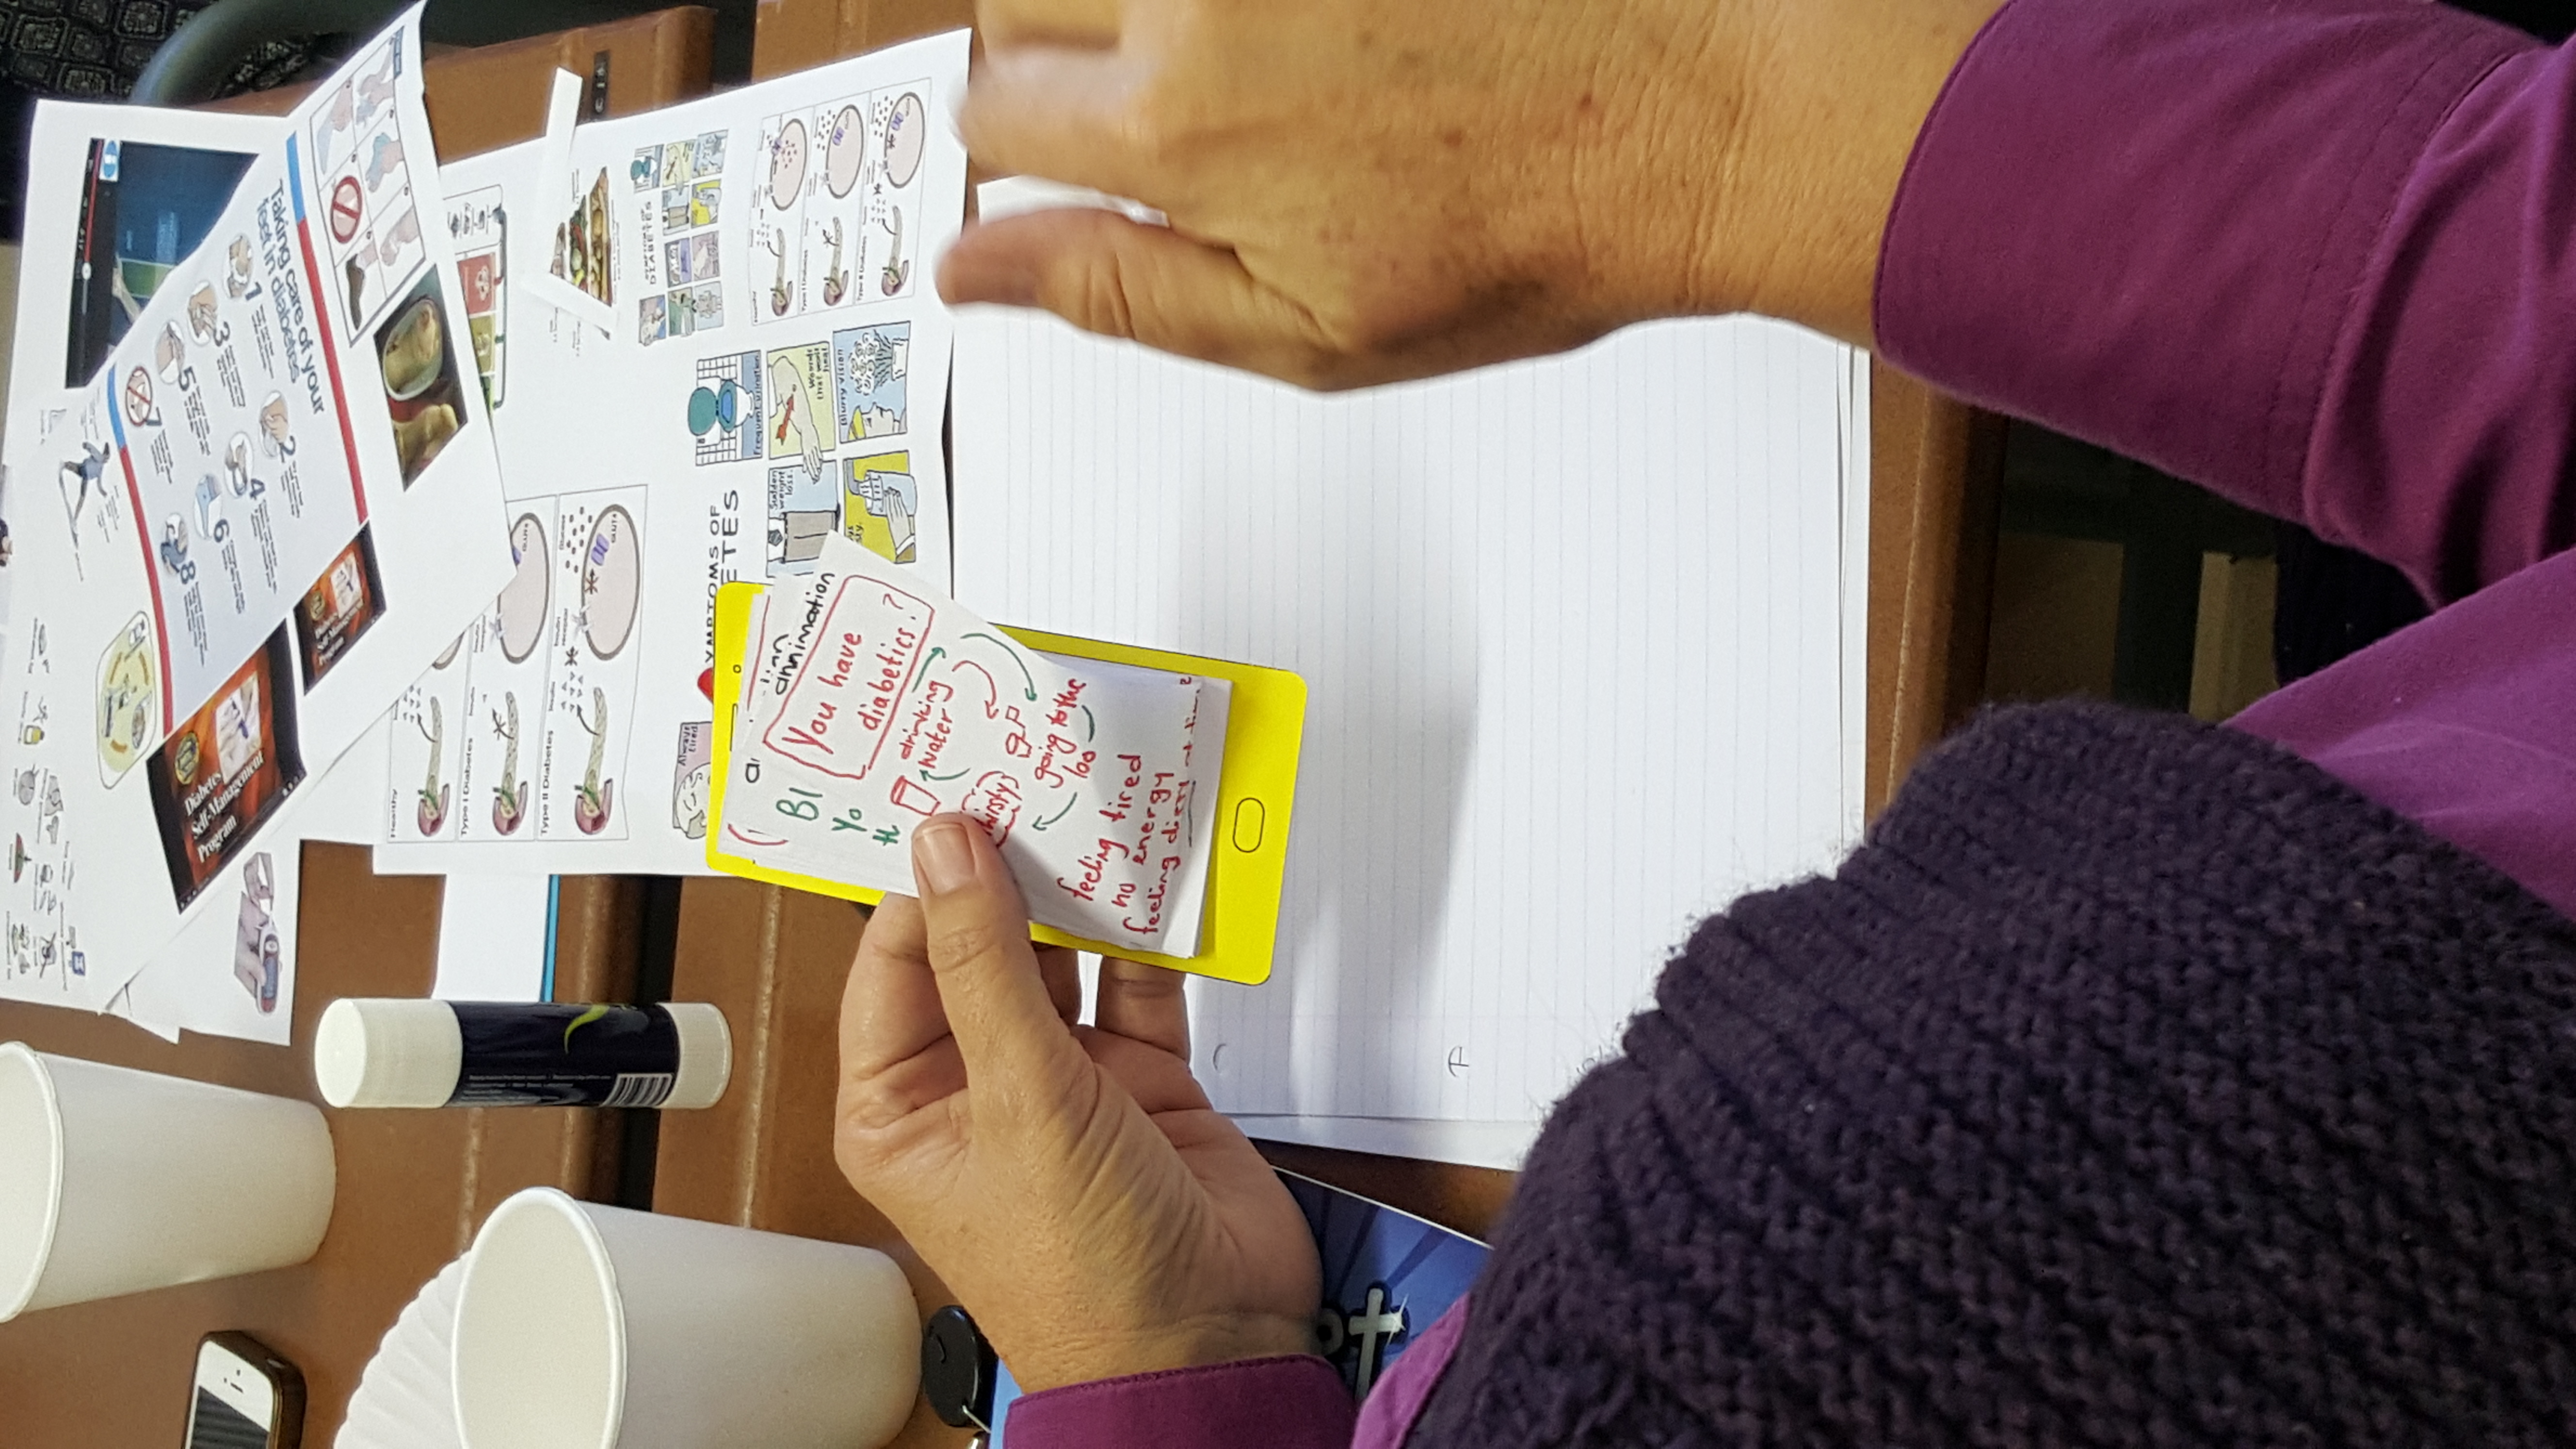 A brainstorm session participant holding cue cards